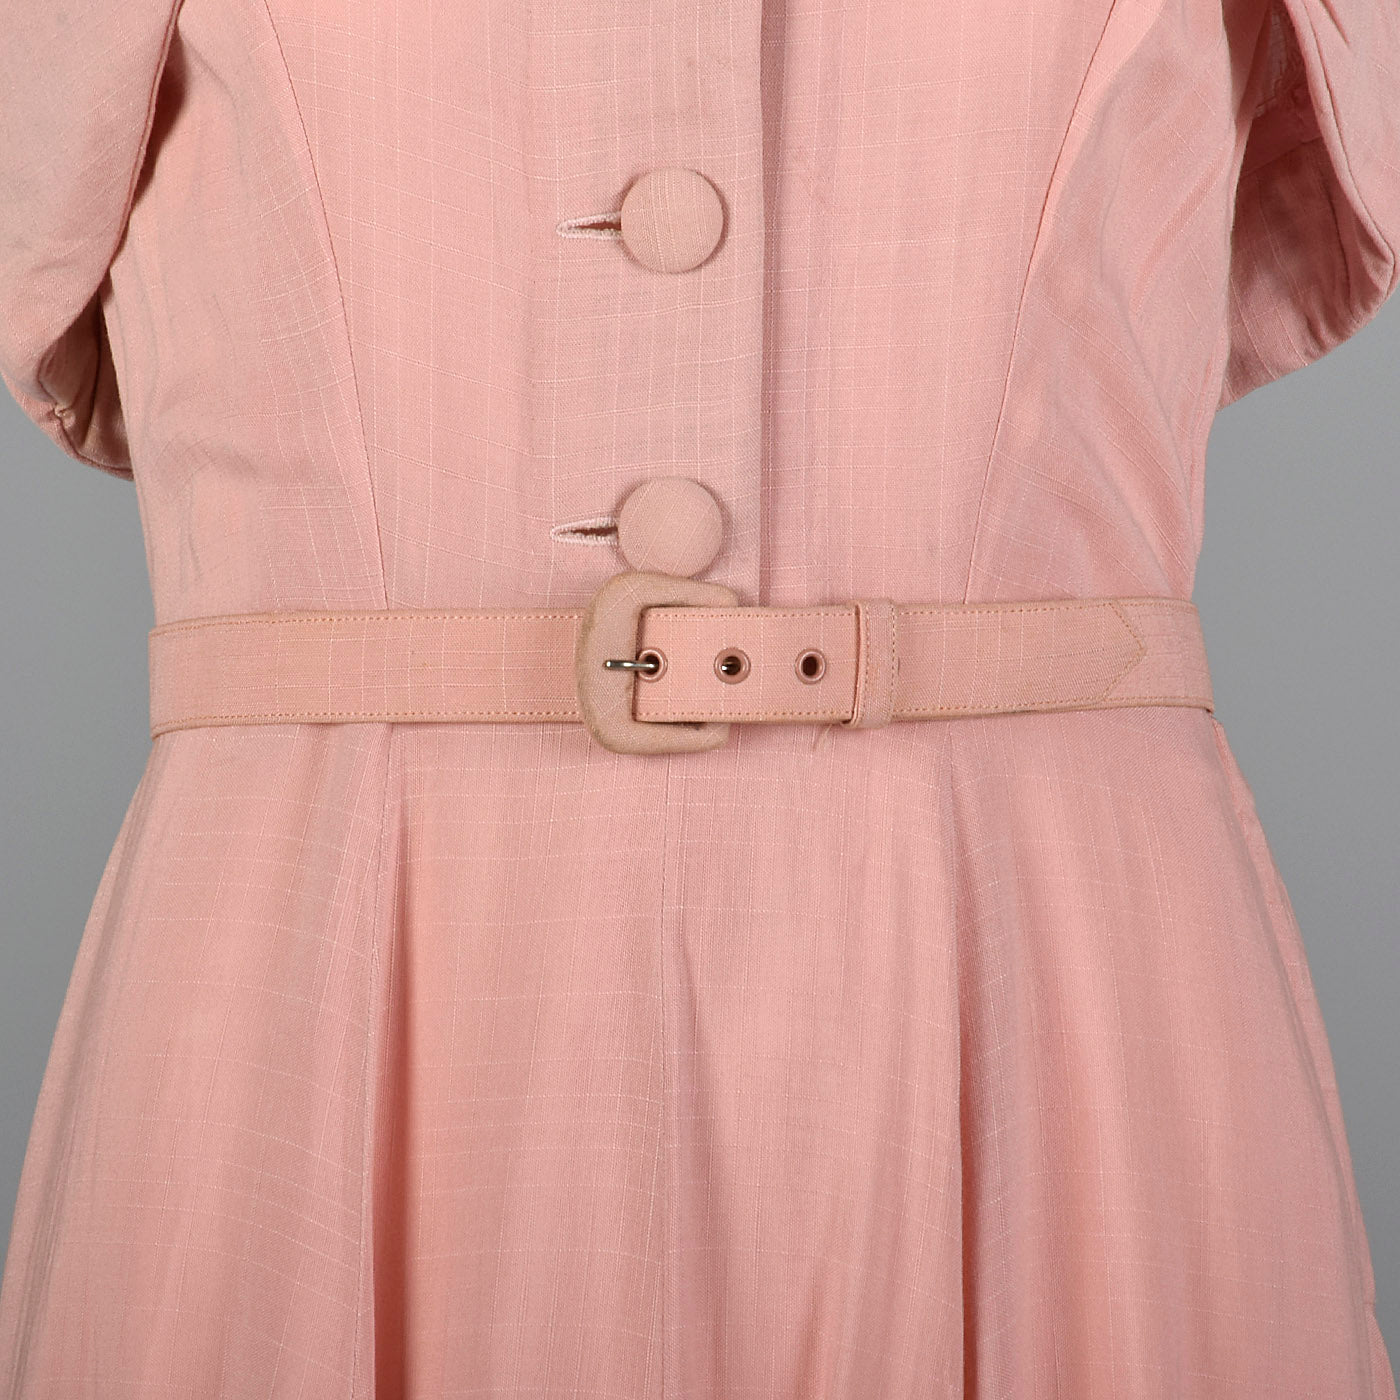 1950s Pink Day Dress with Matching Bolero